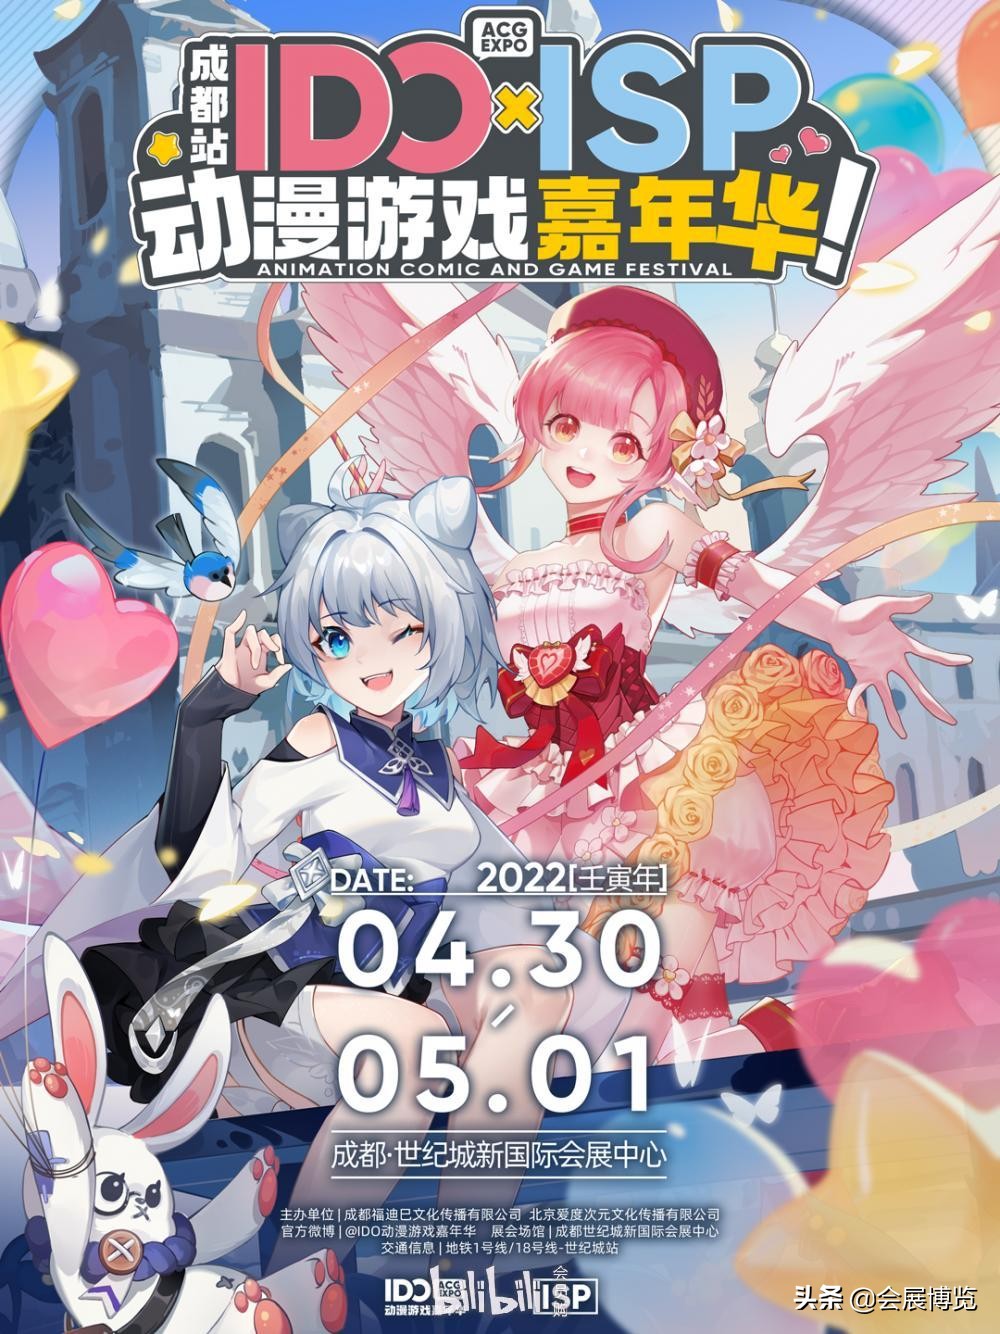 成都·IDO×ISP动漫游戏嘉年华2022年4月30日-5月1日 09:30-17:00